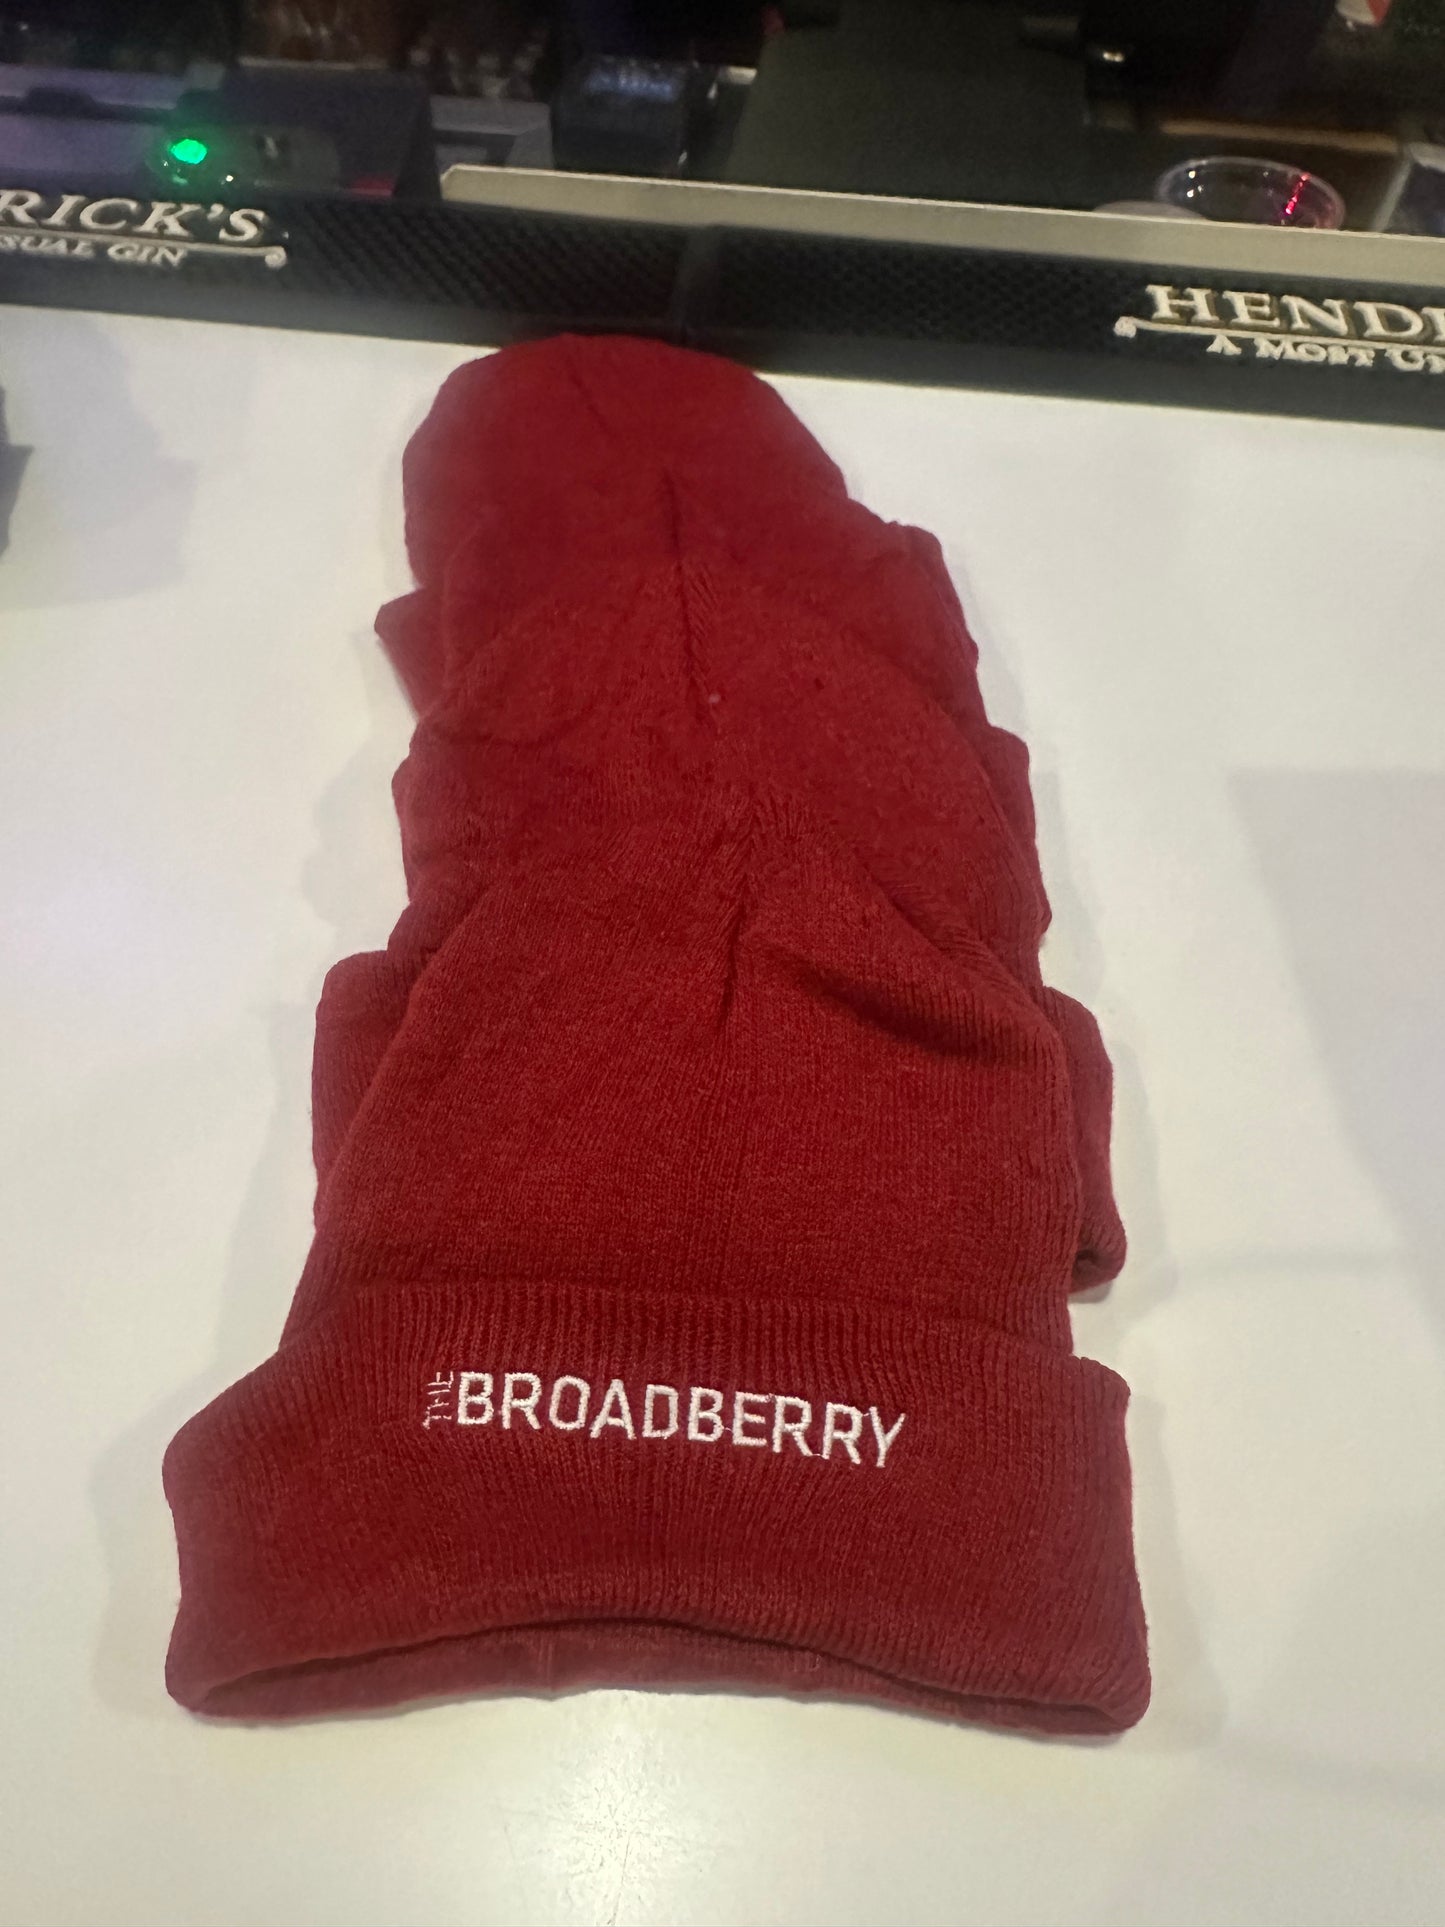 Broadberry Beanie